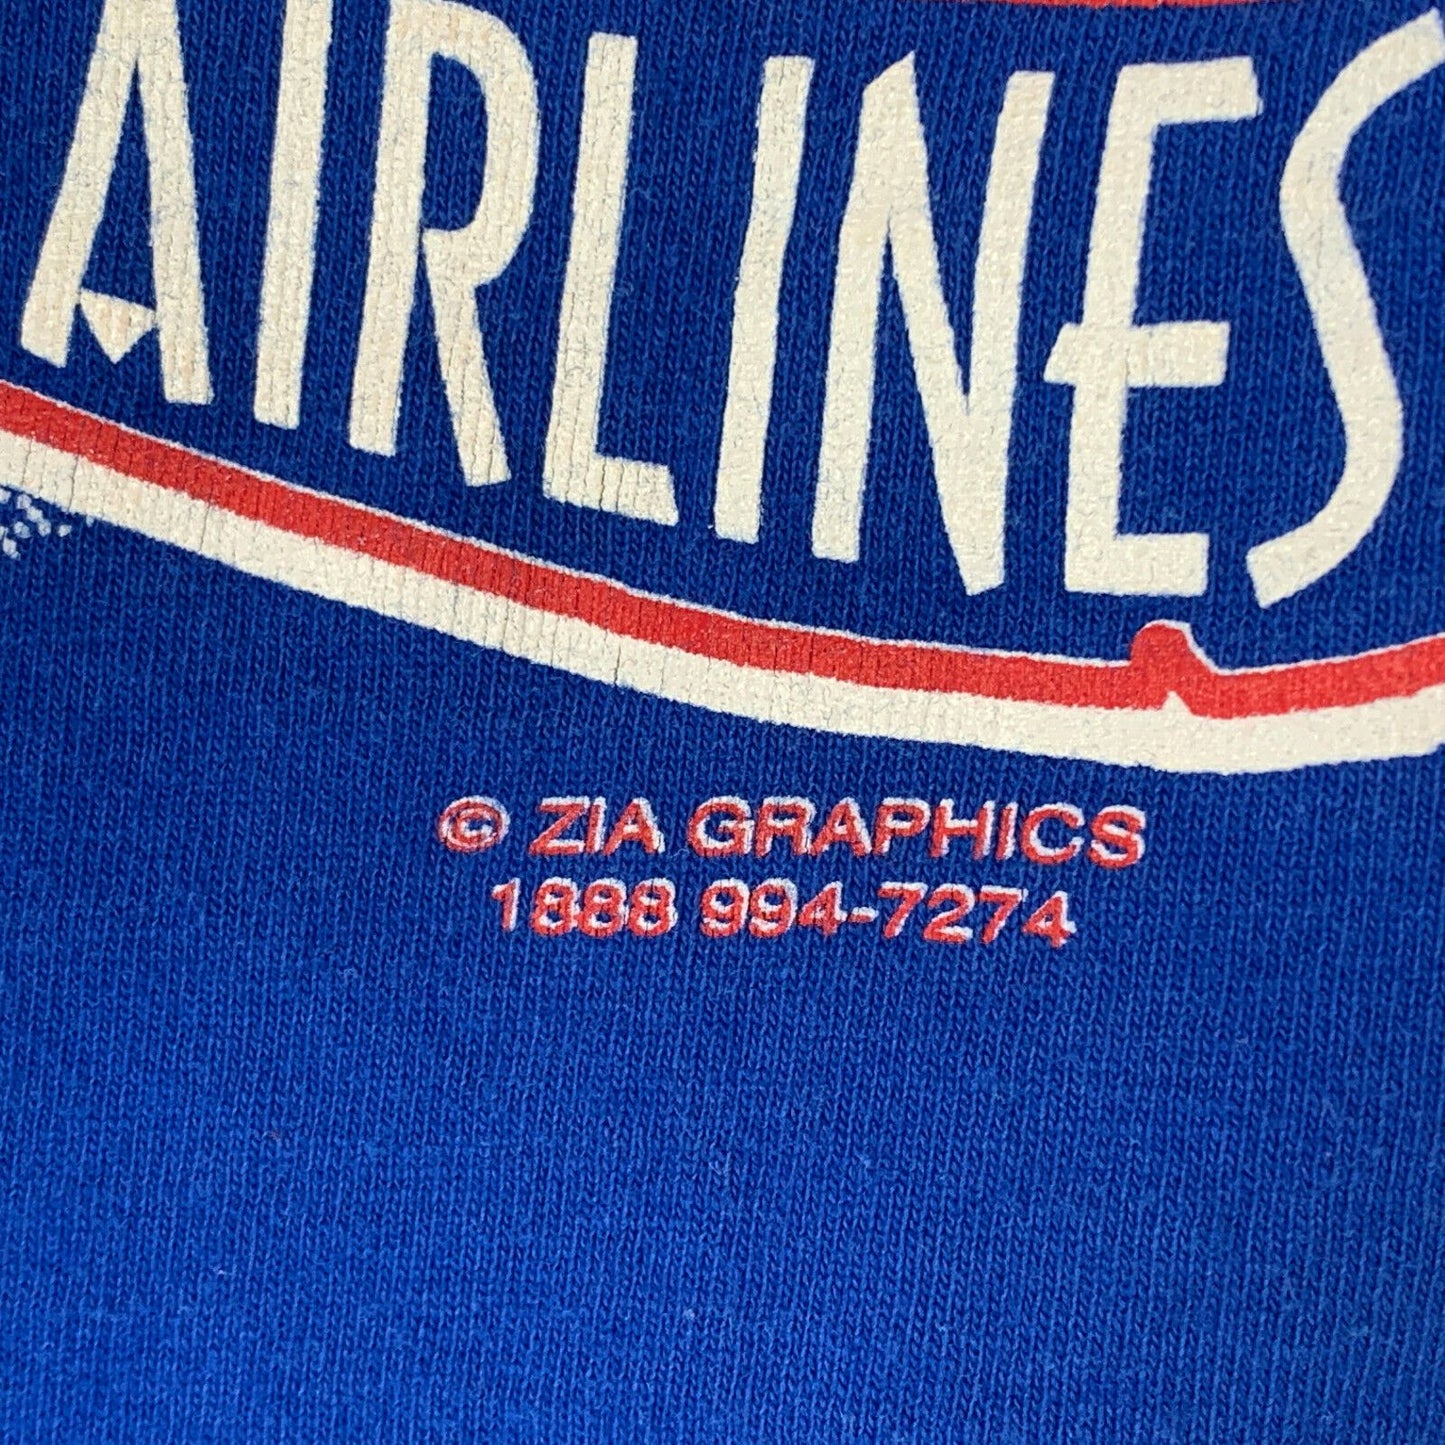 Spirit of Southwest Airlines T Shirt Medium Team Las Vegas Blue Graphic Tee